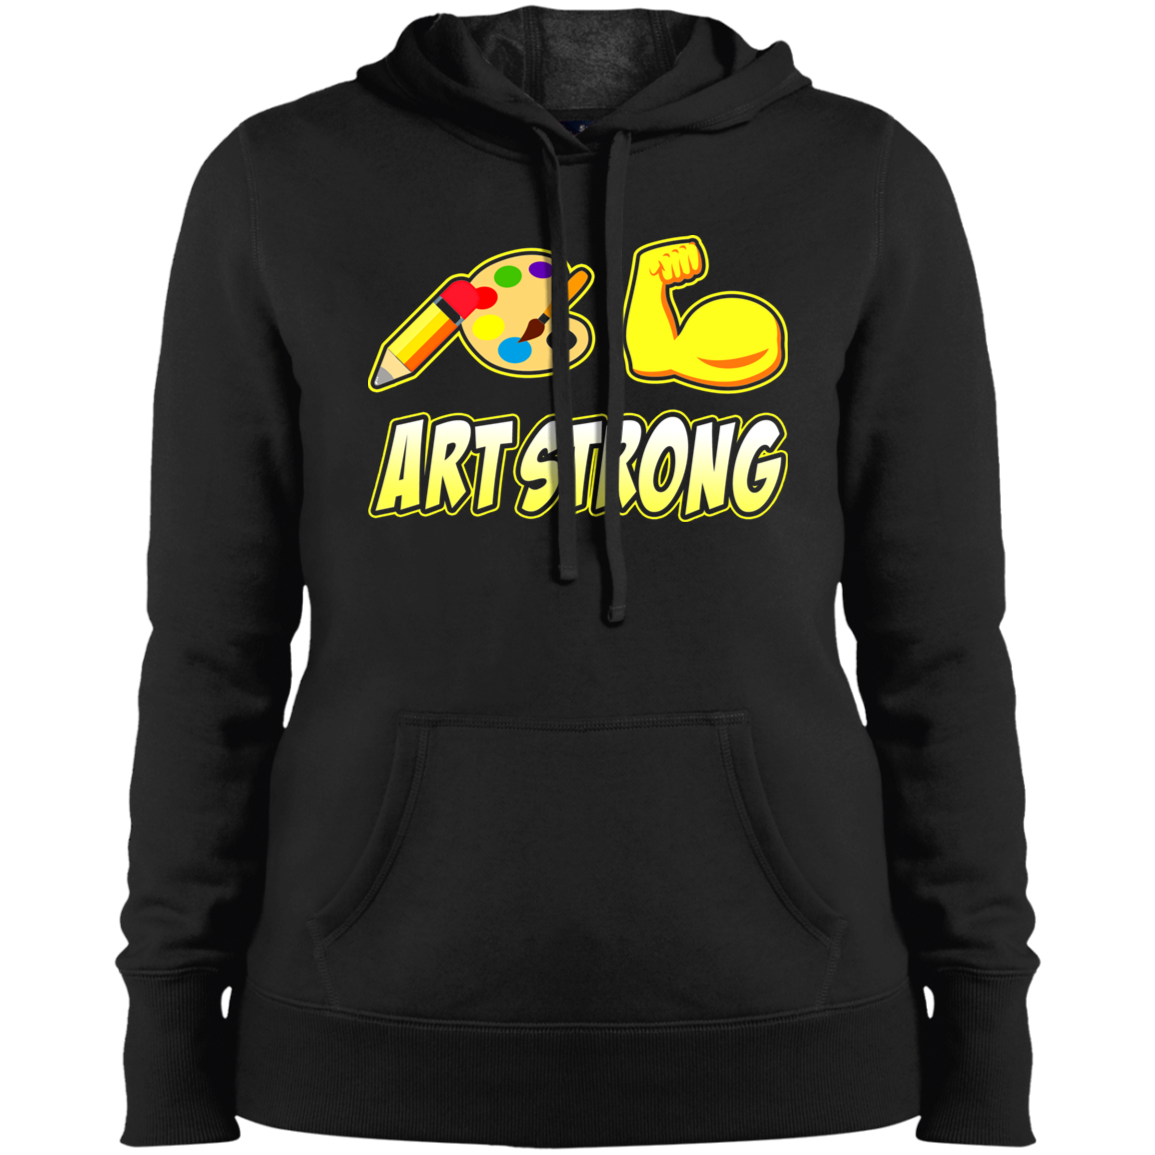 ArtichokeUSA Custom Design. Art Strong. Ladies' Pullover Hooded Sweatshirt